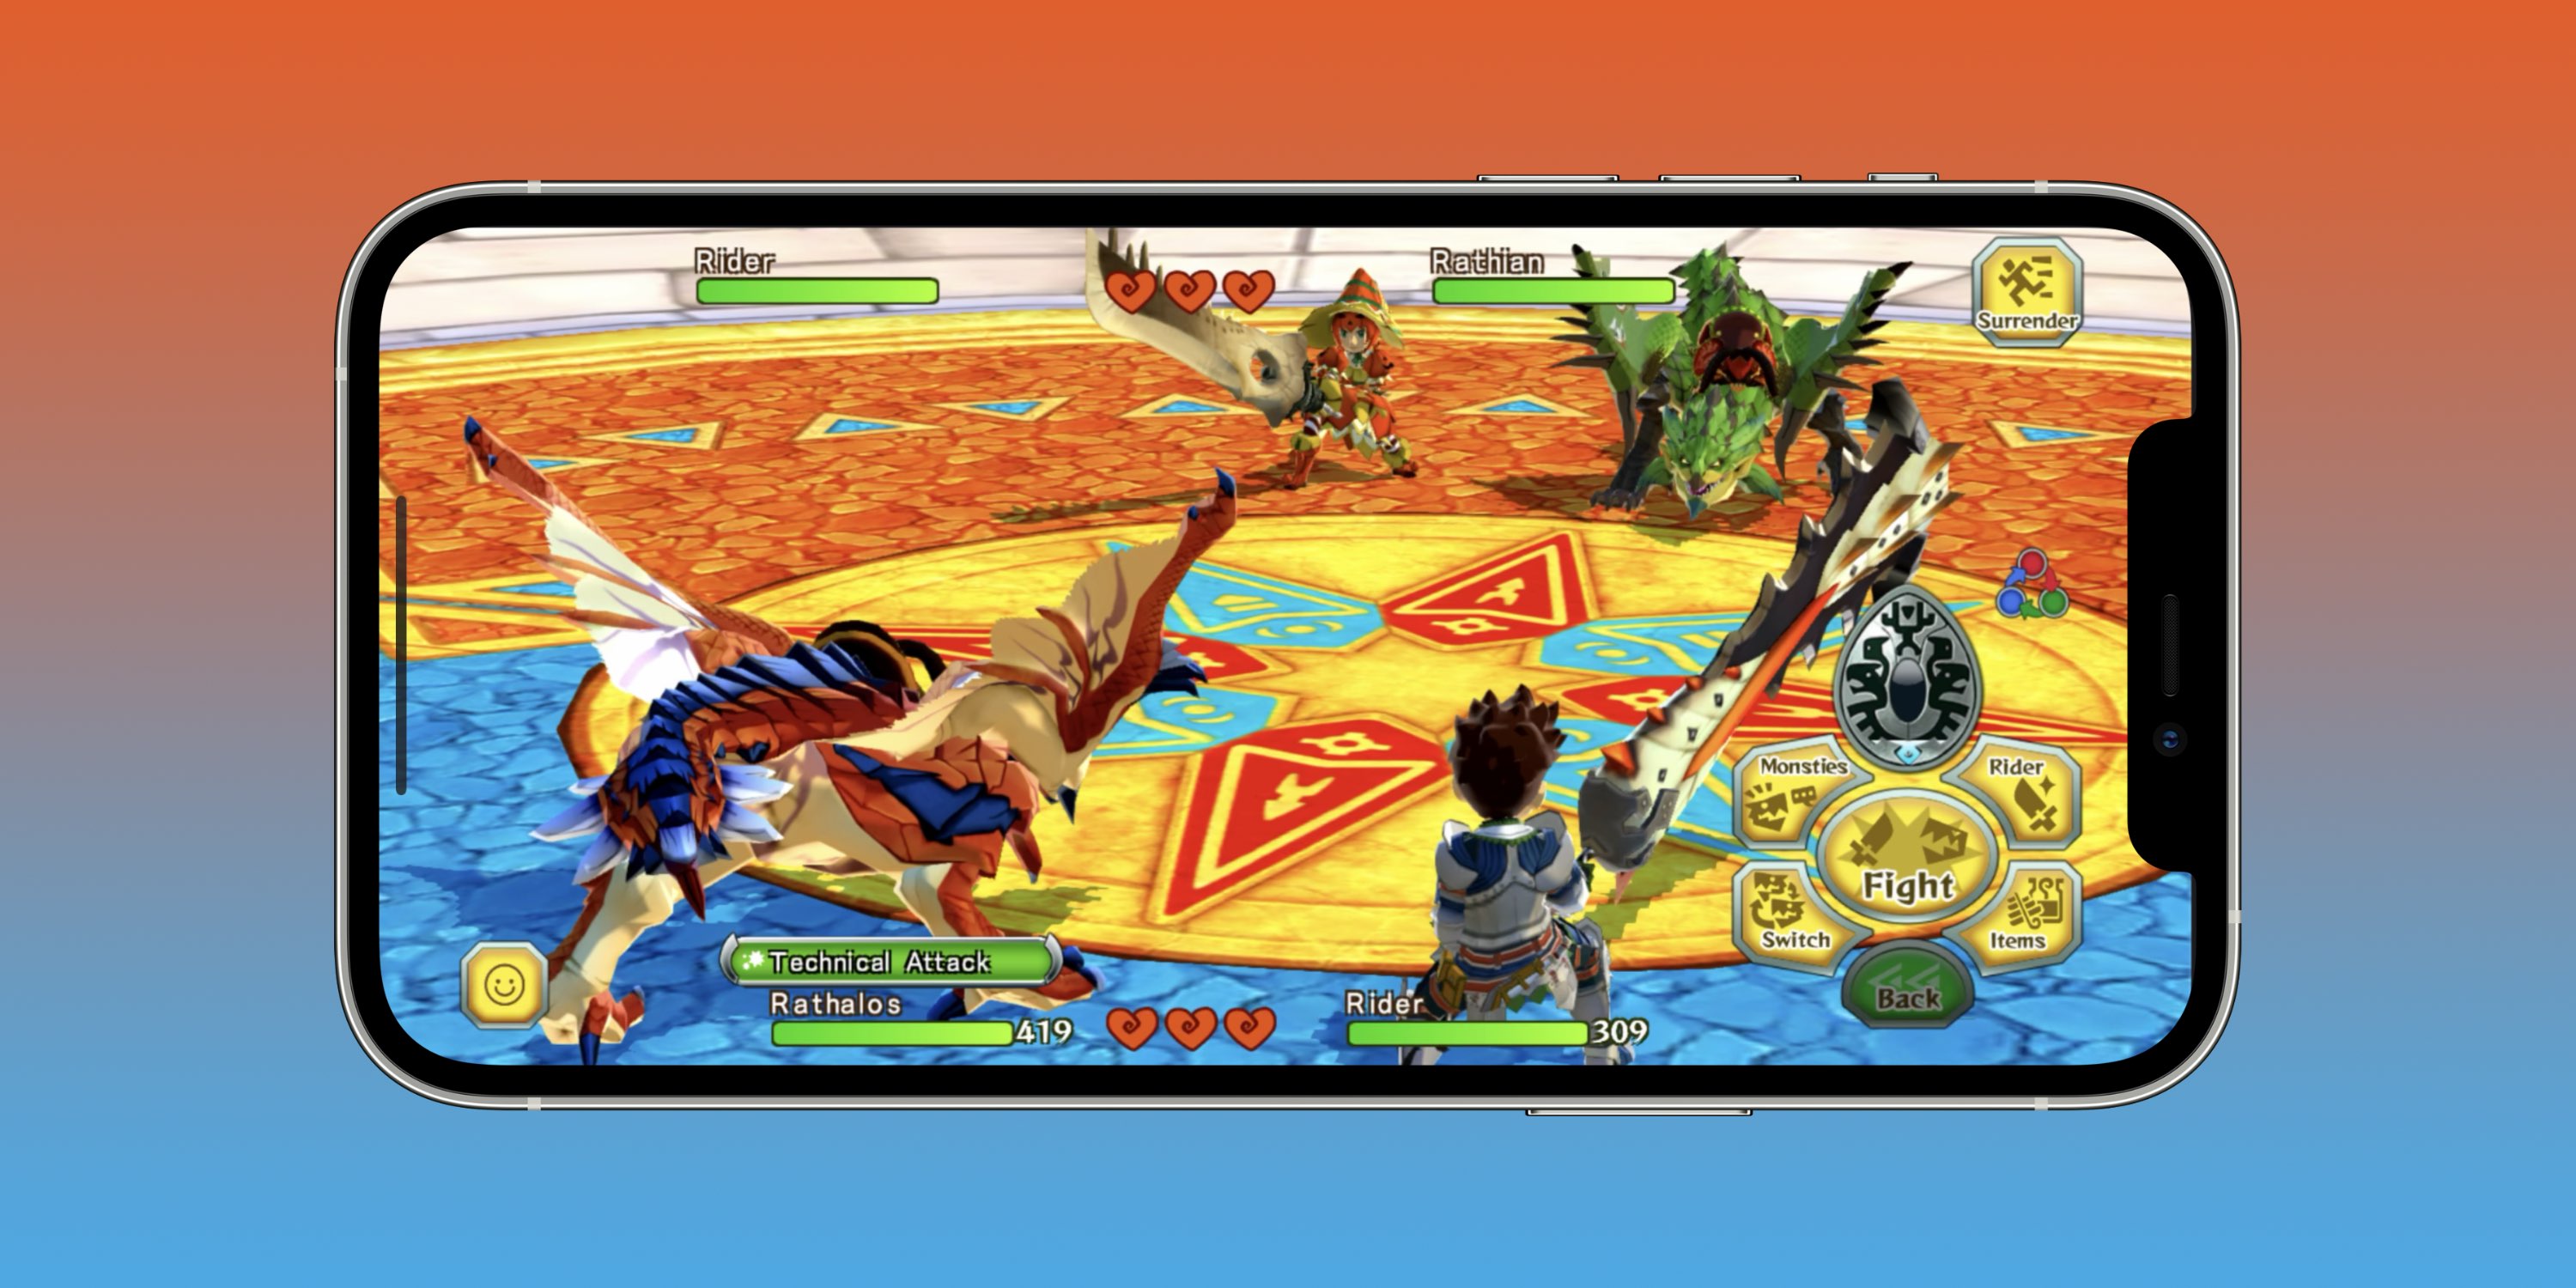 Super Stickman Golf 3+ is returning as an Apple Arcade game soon